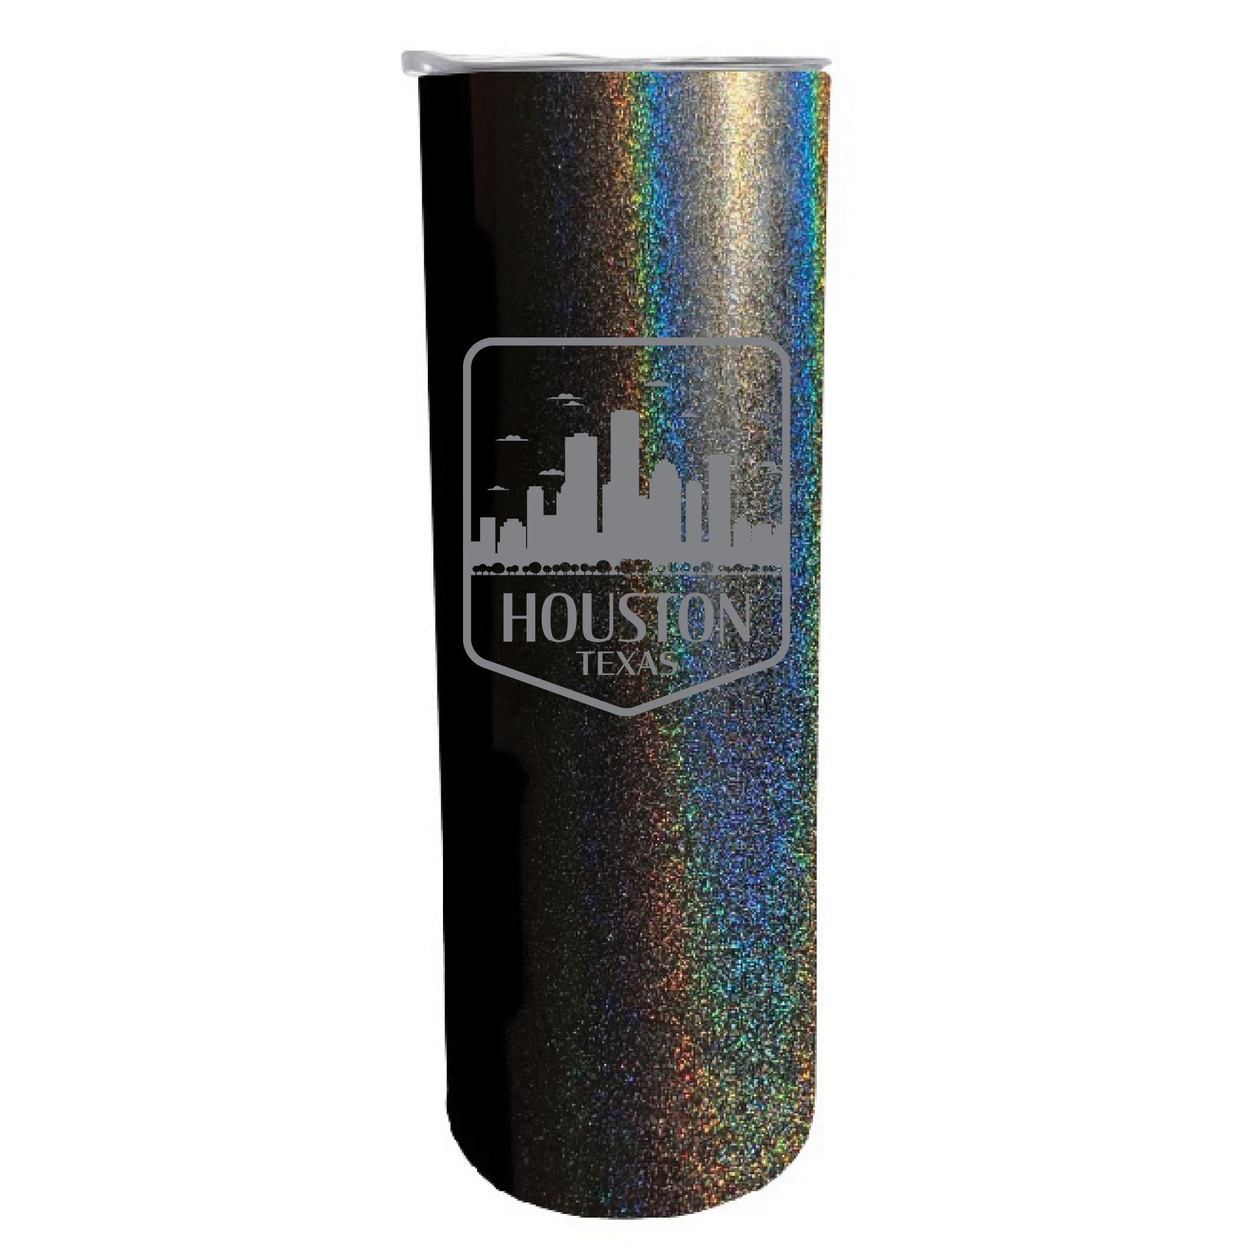 Houston Texas Souvenir 20 Oz Engraved Insulated Stainless Steel Skinny Tumbler - Black Glitter,,Single Unit